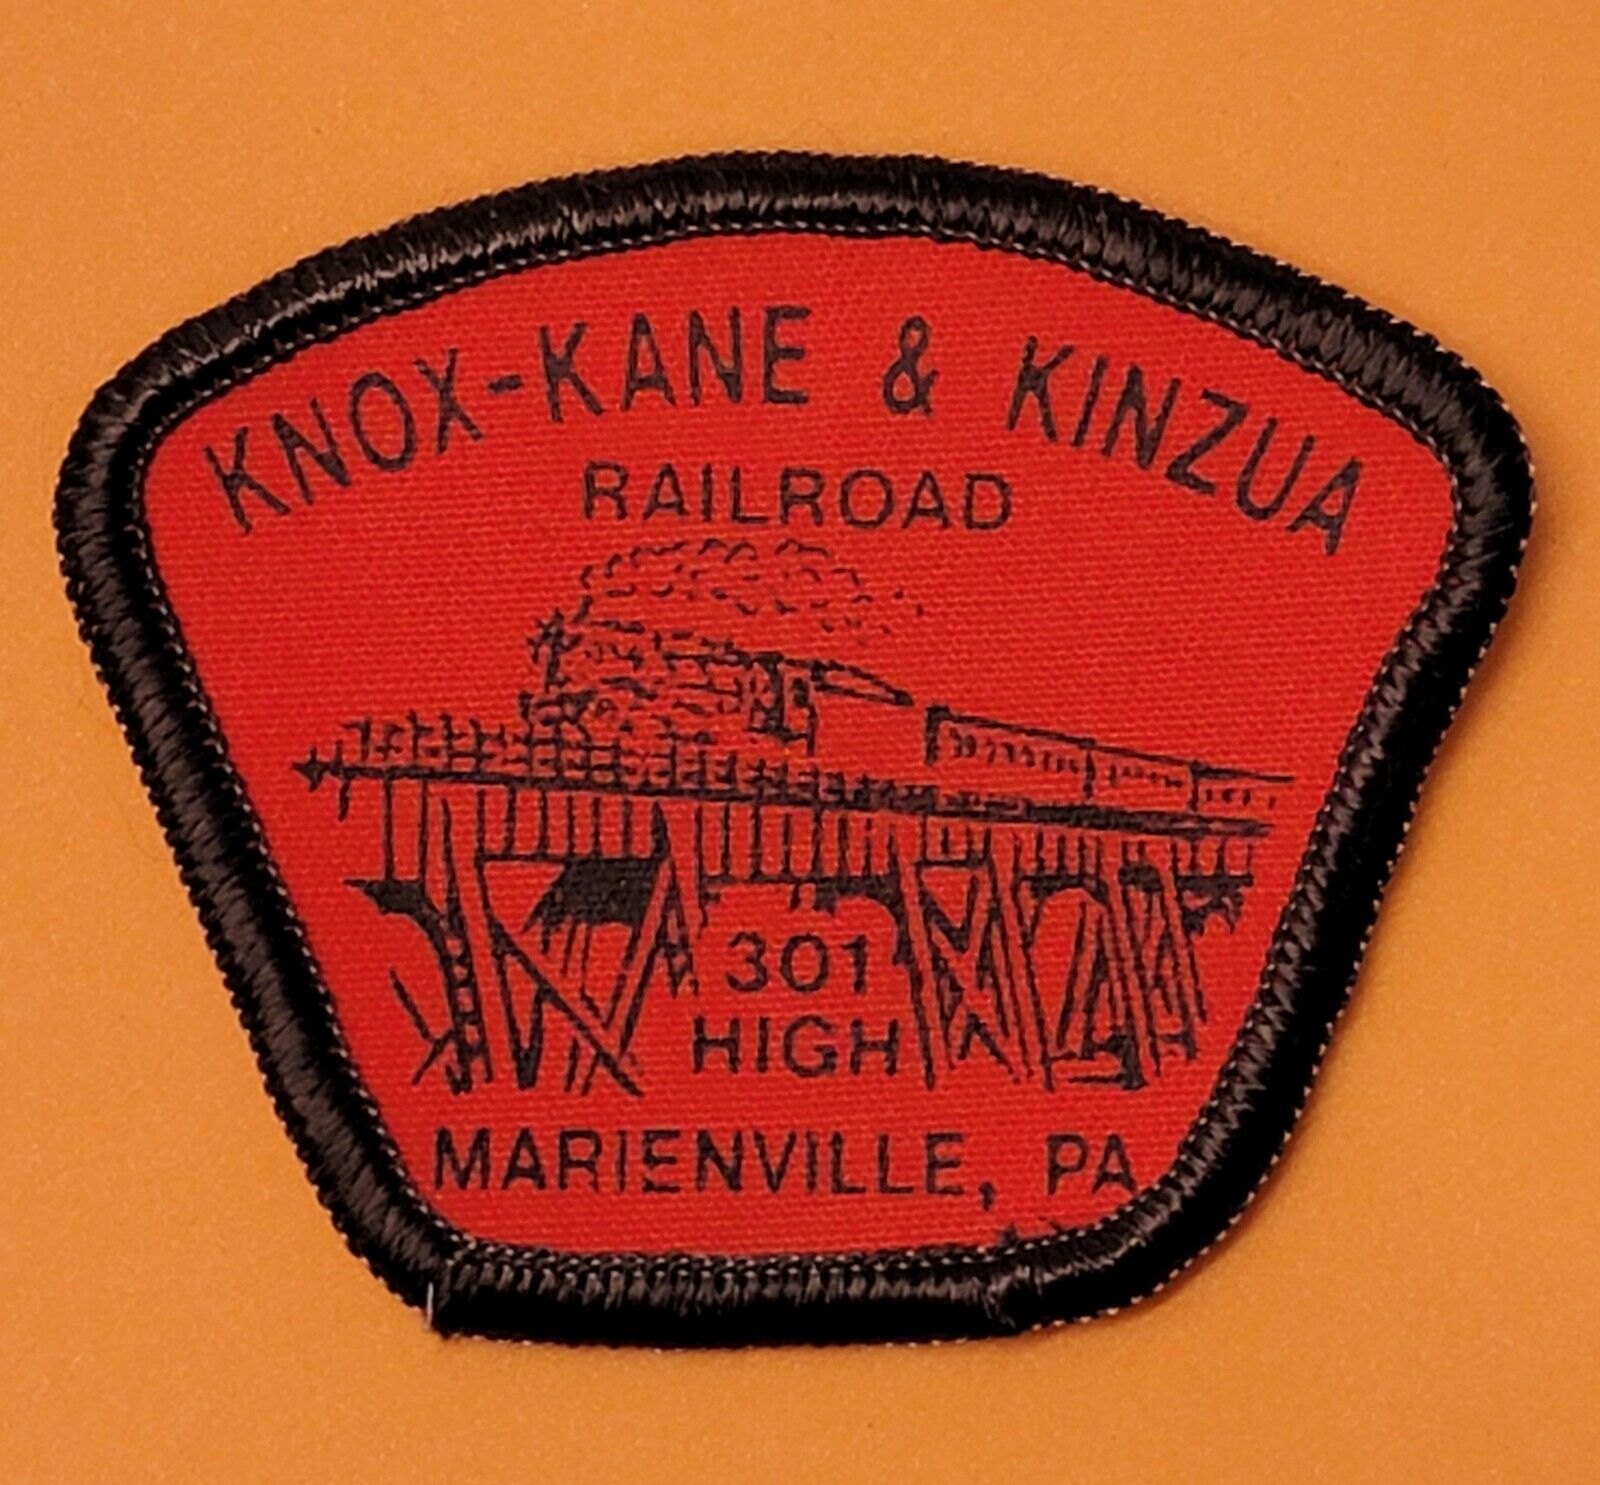 Vintage Knox-Kane & Kinzua Railroad Badge Patch, Marienville, Pennsylvania 